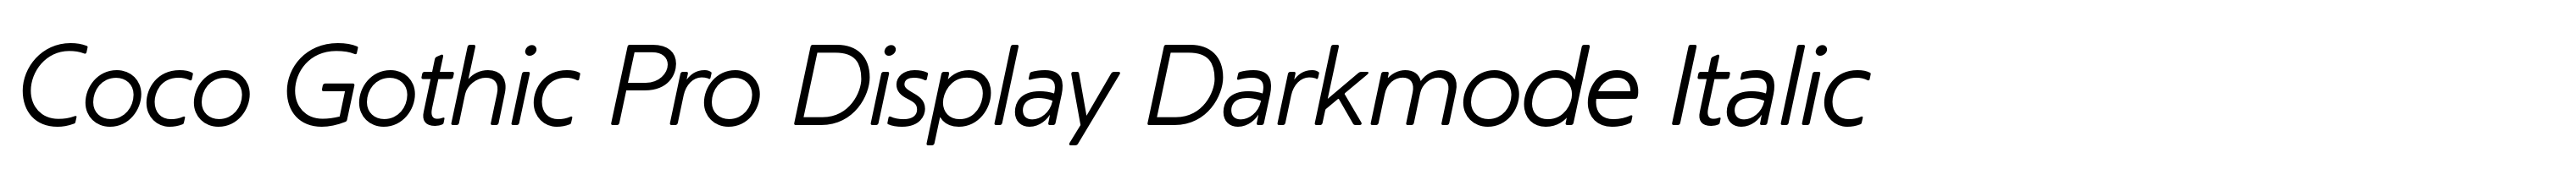 Coco Gothic Pro Display Darkmode Italic